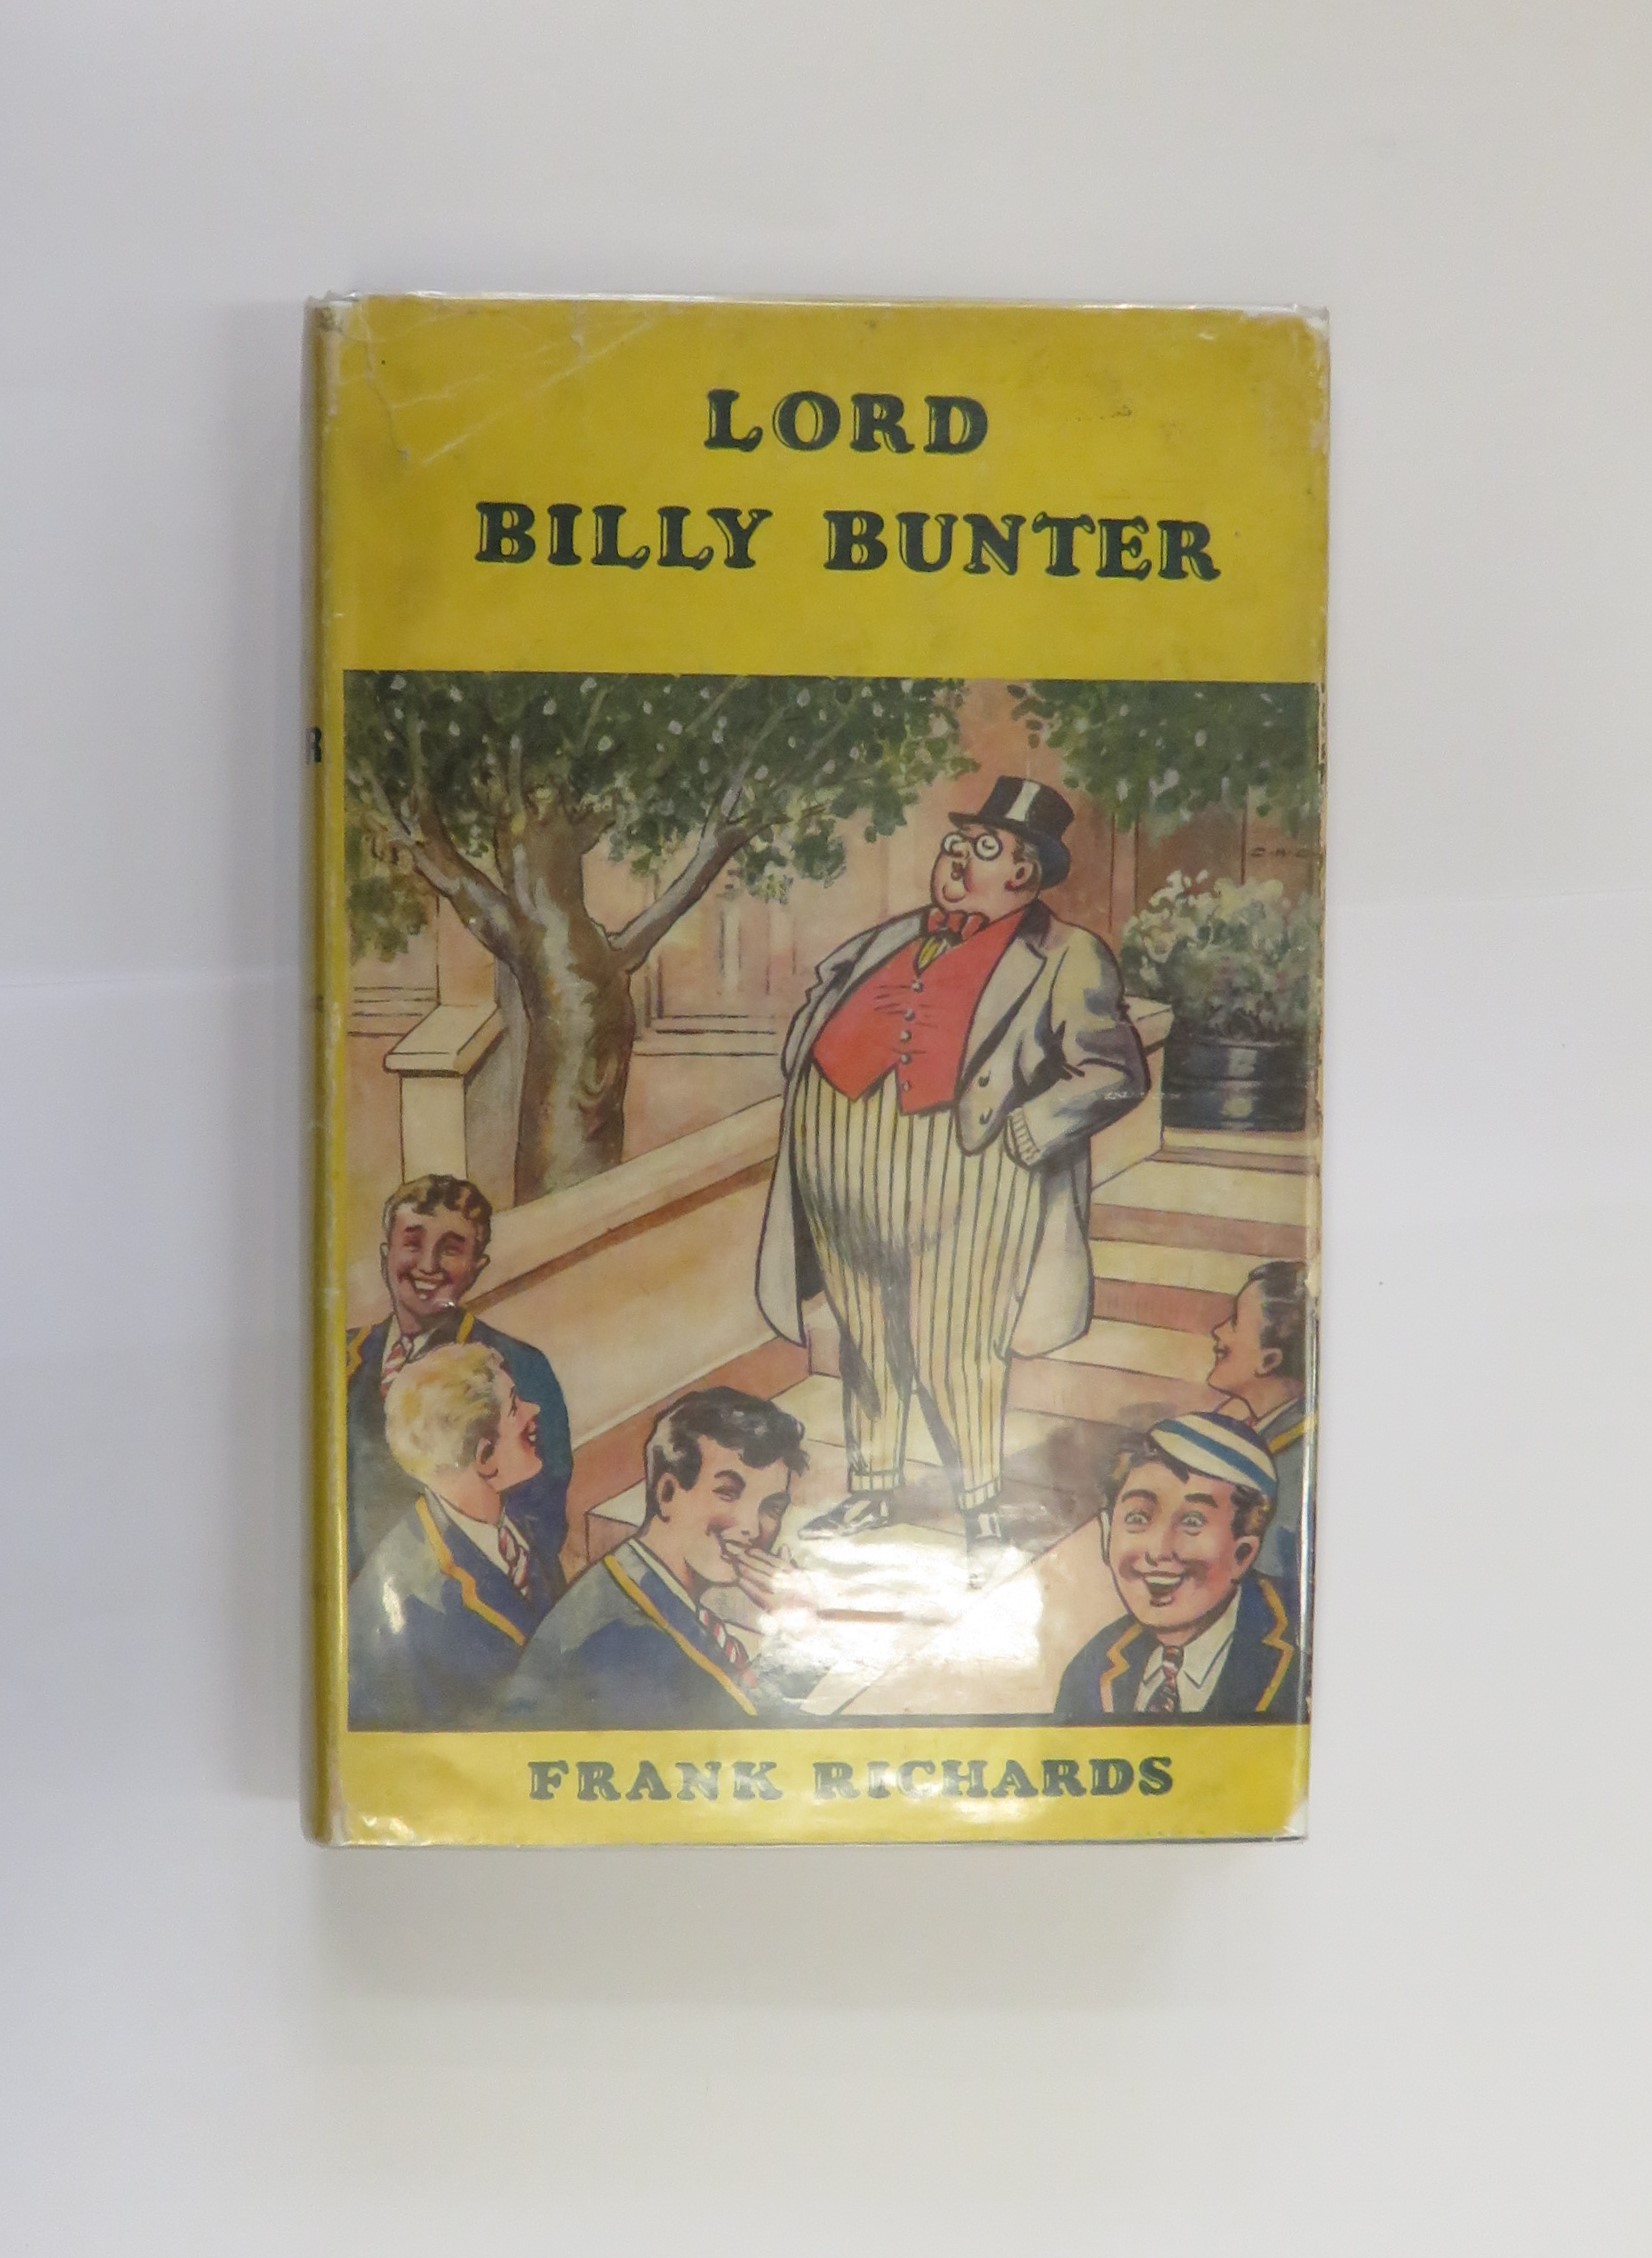 Lord Billy Bunter